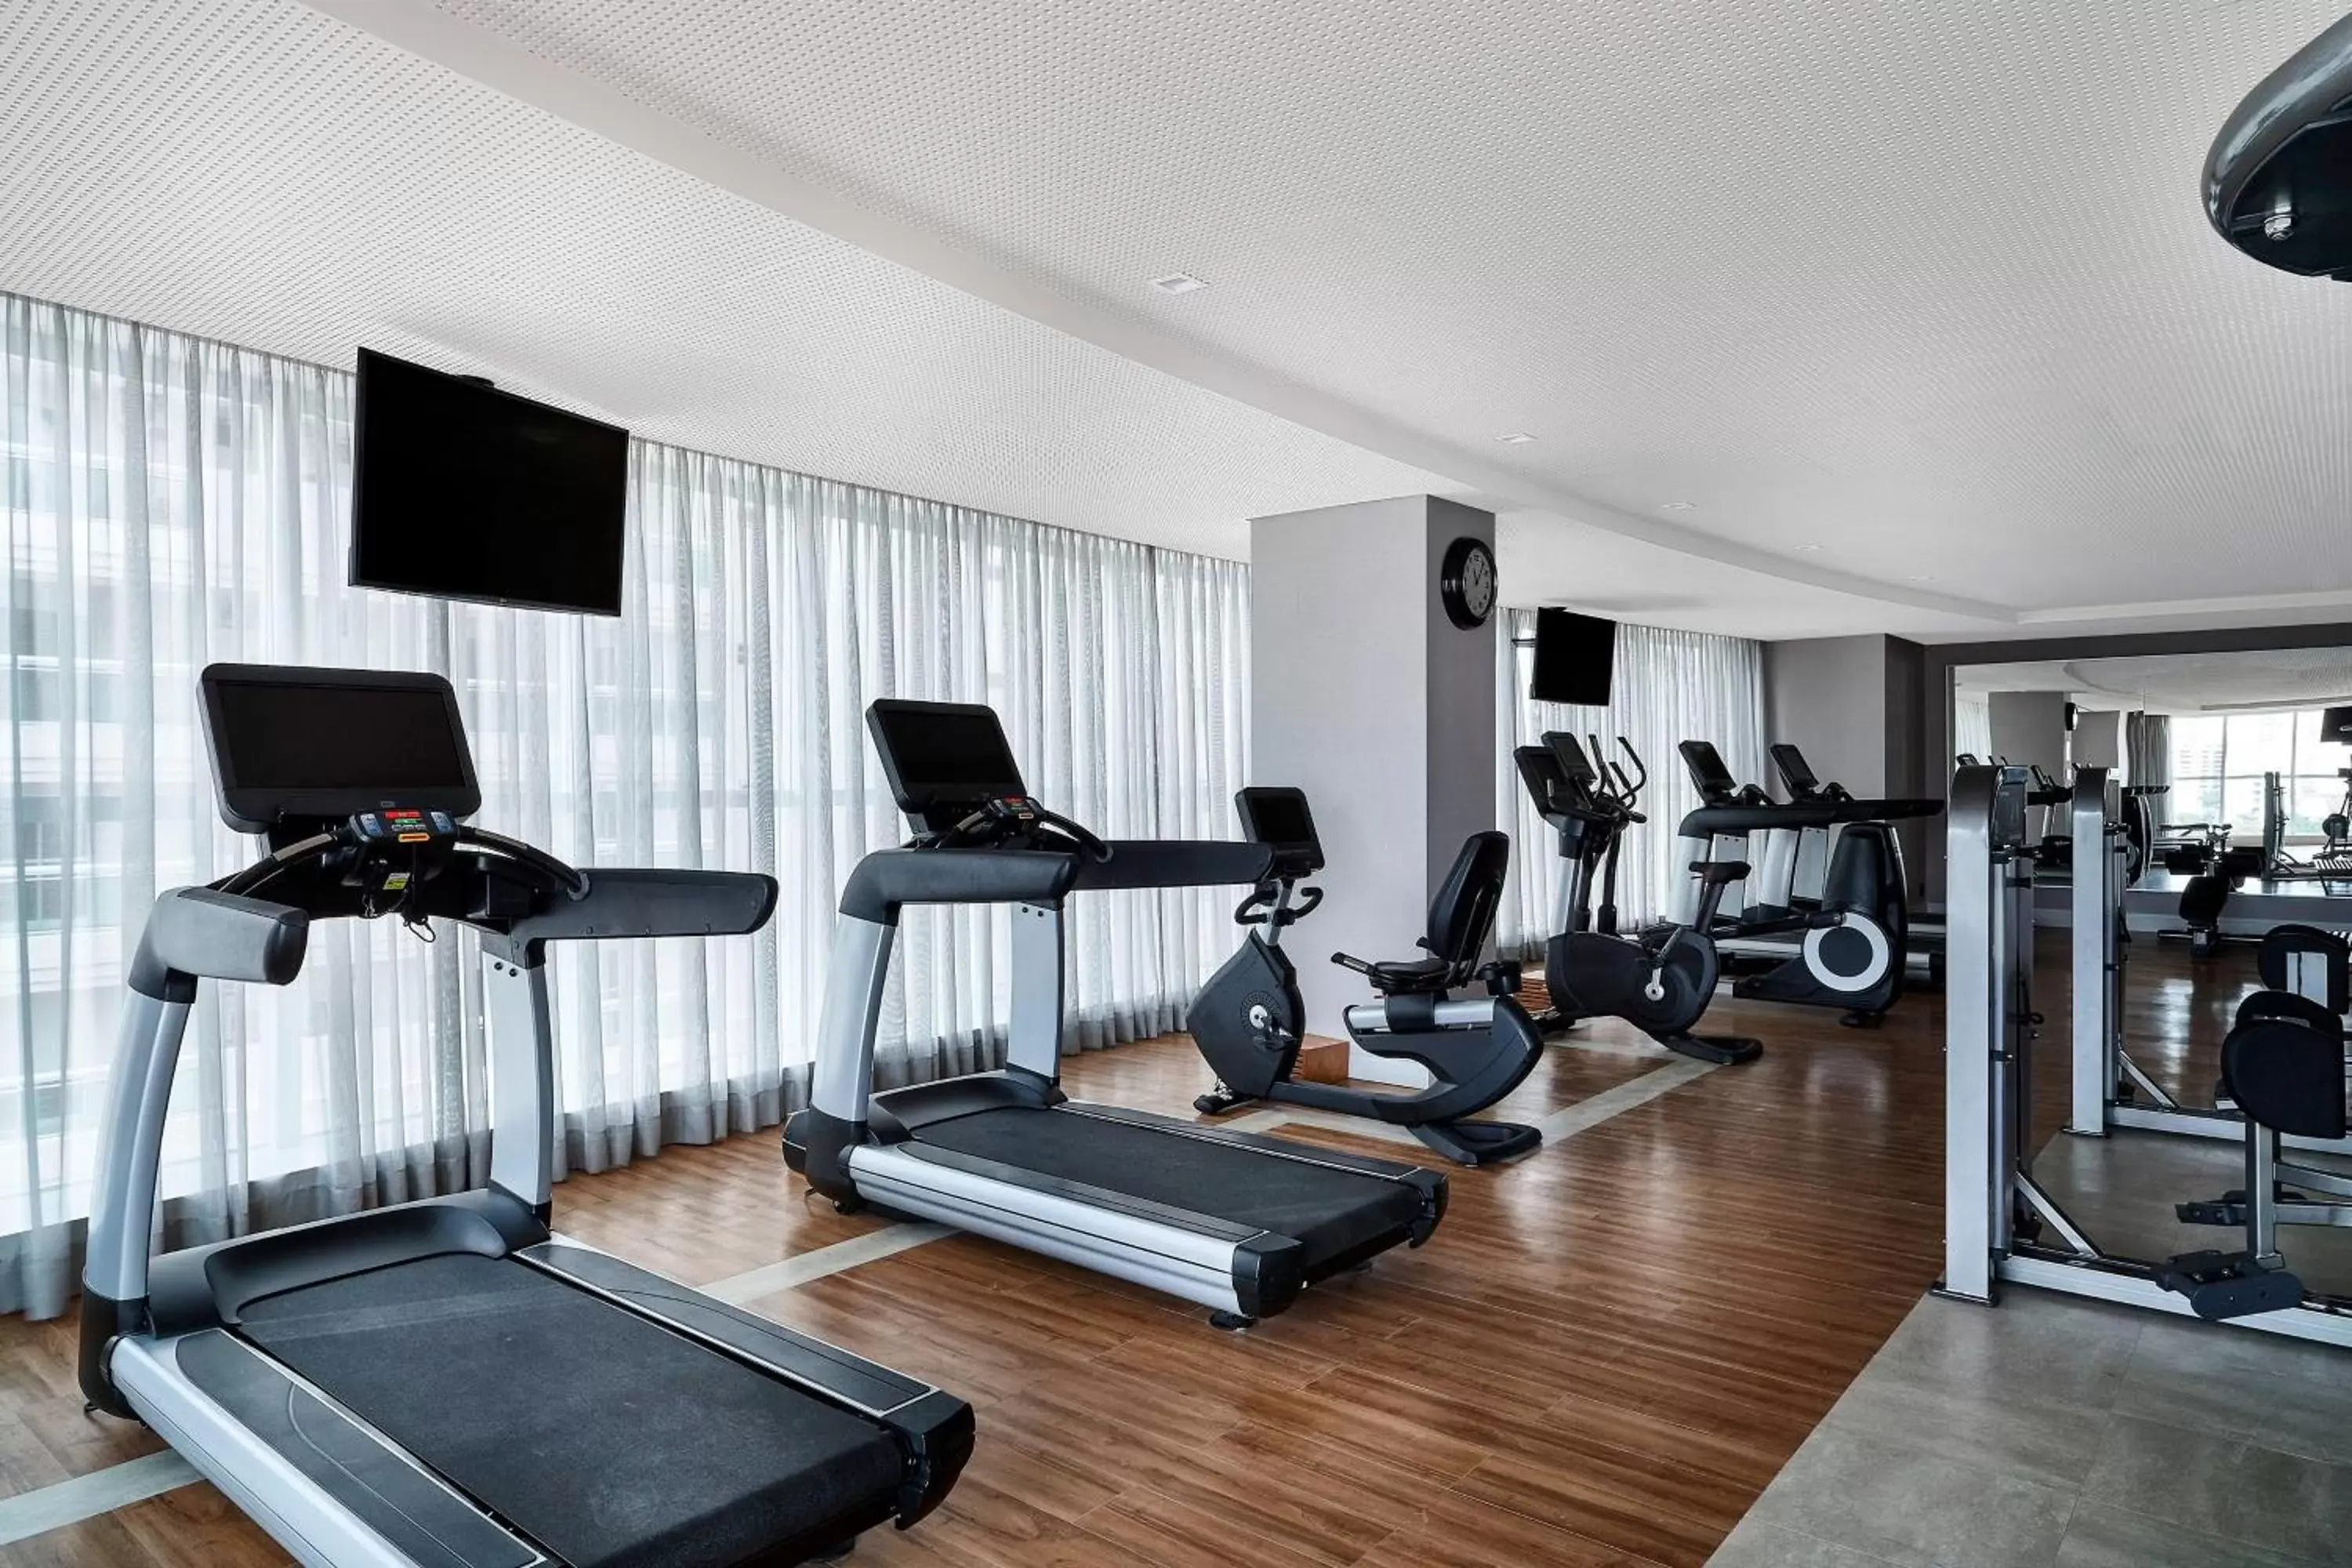 Fitness centre/facilities, Fitness Center/Facilities in Sheraton Santos Hotel